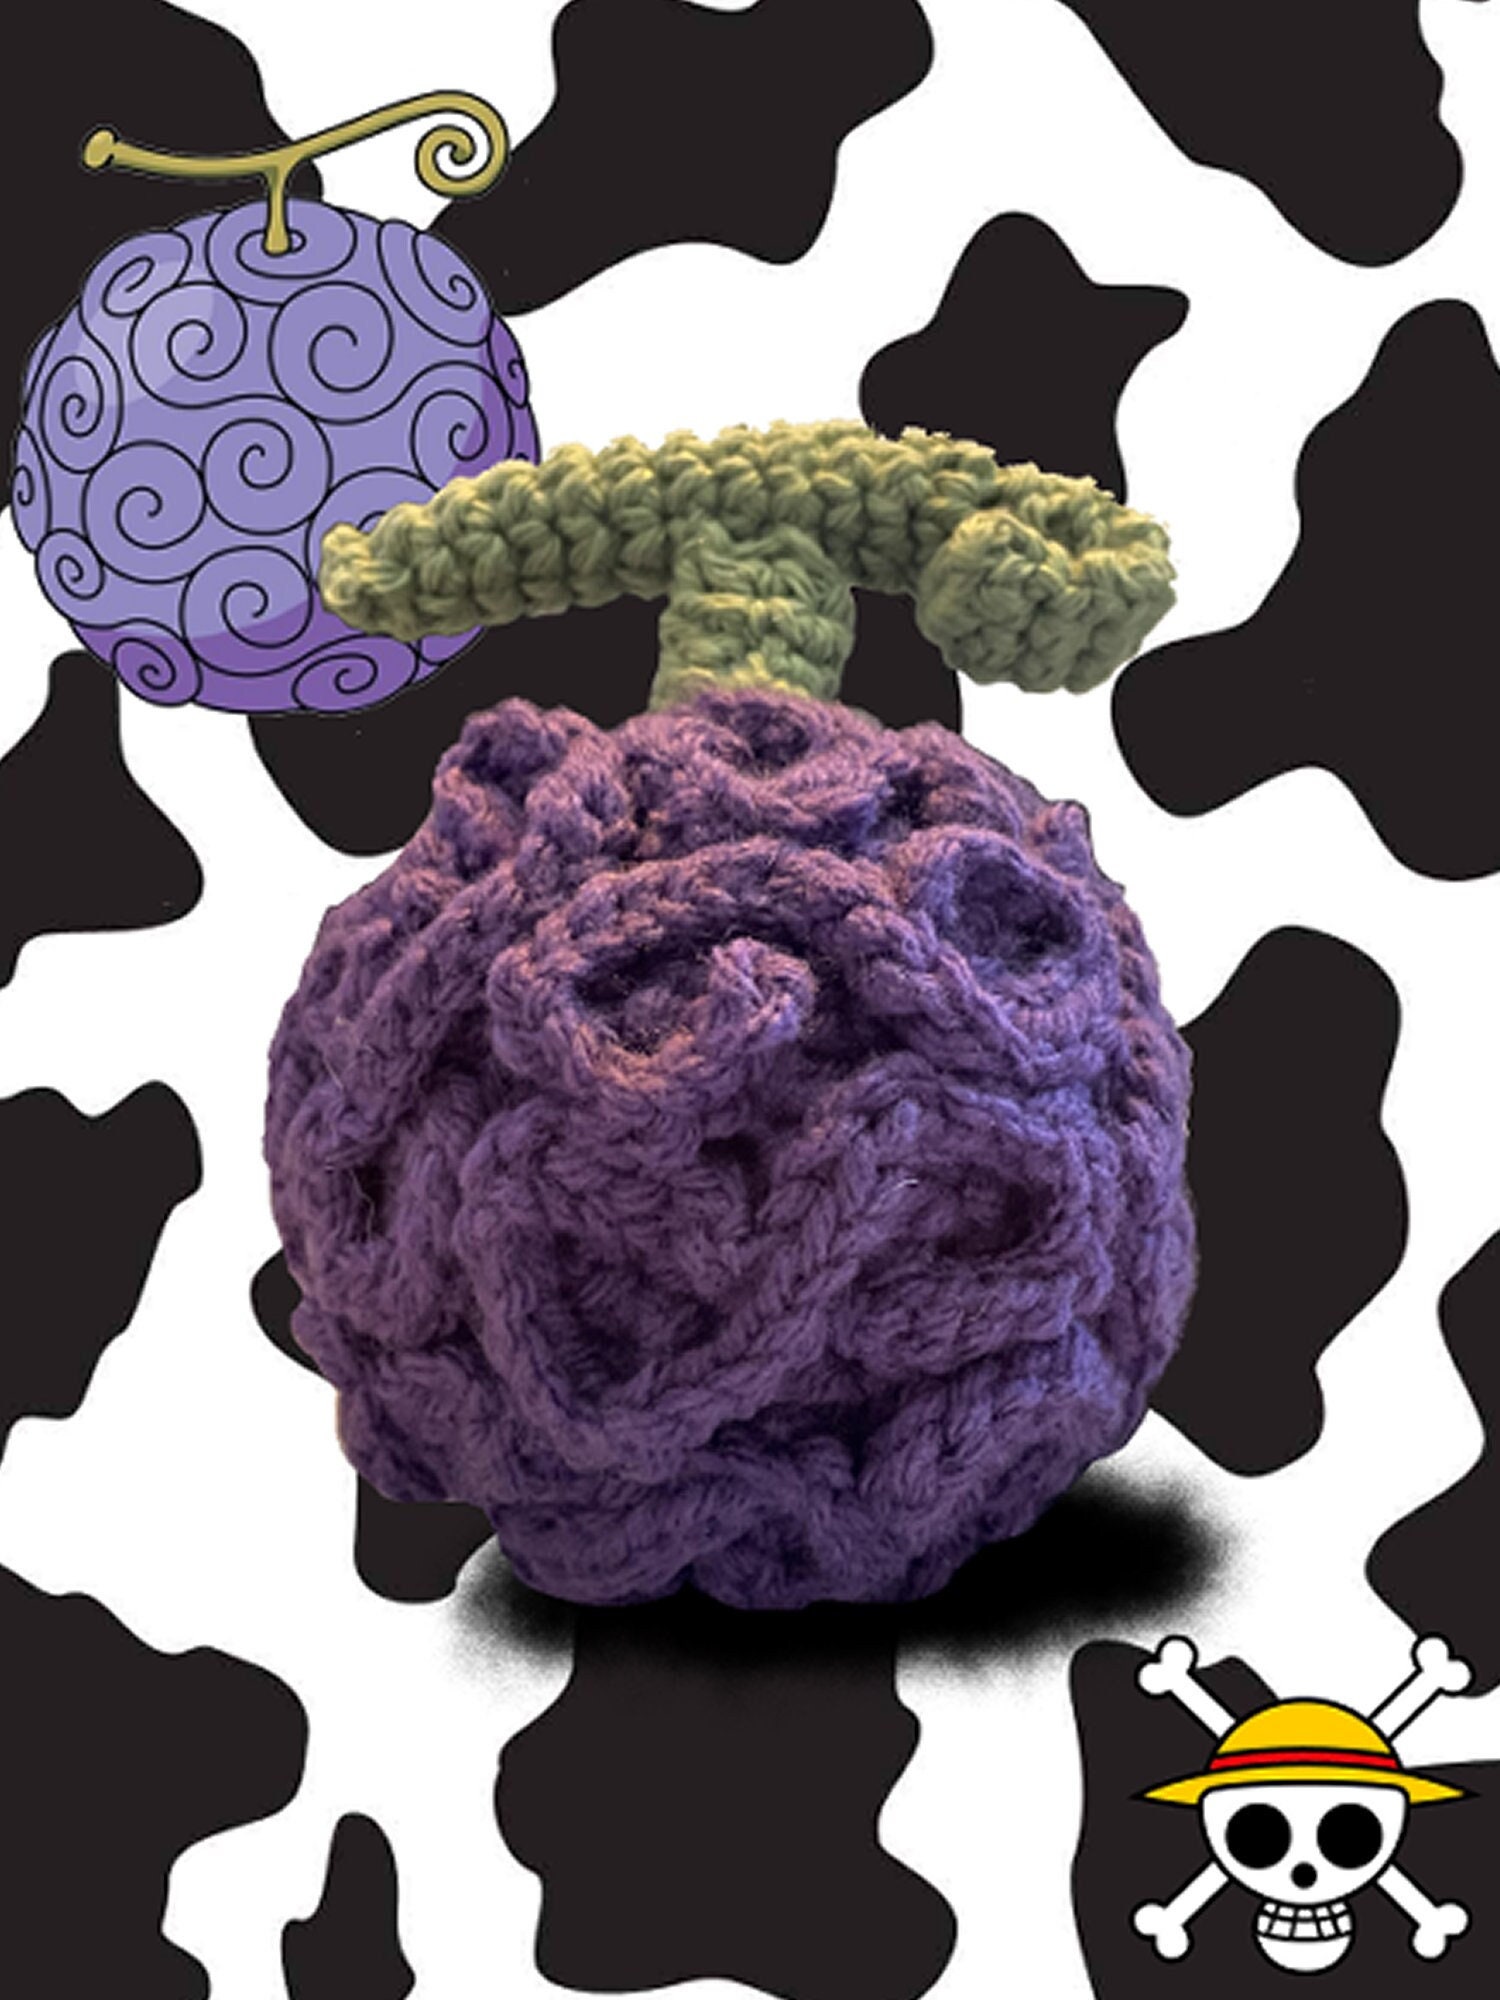 Gomu Gomu No Mi Crochet Pattern (Instant Download) 